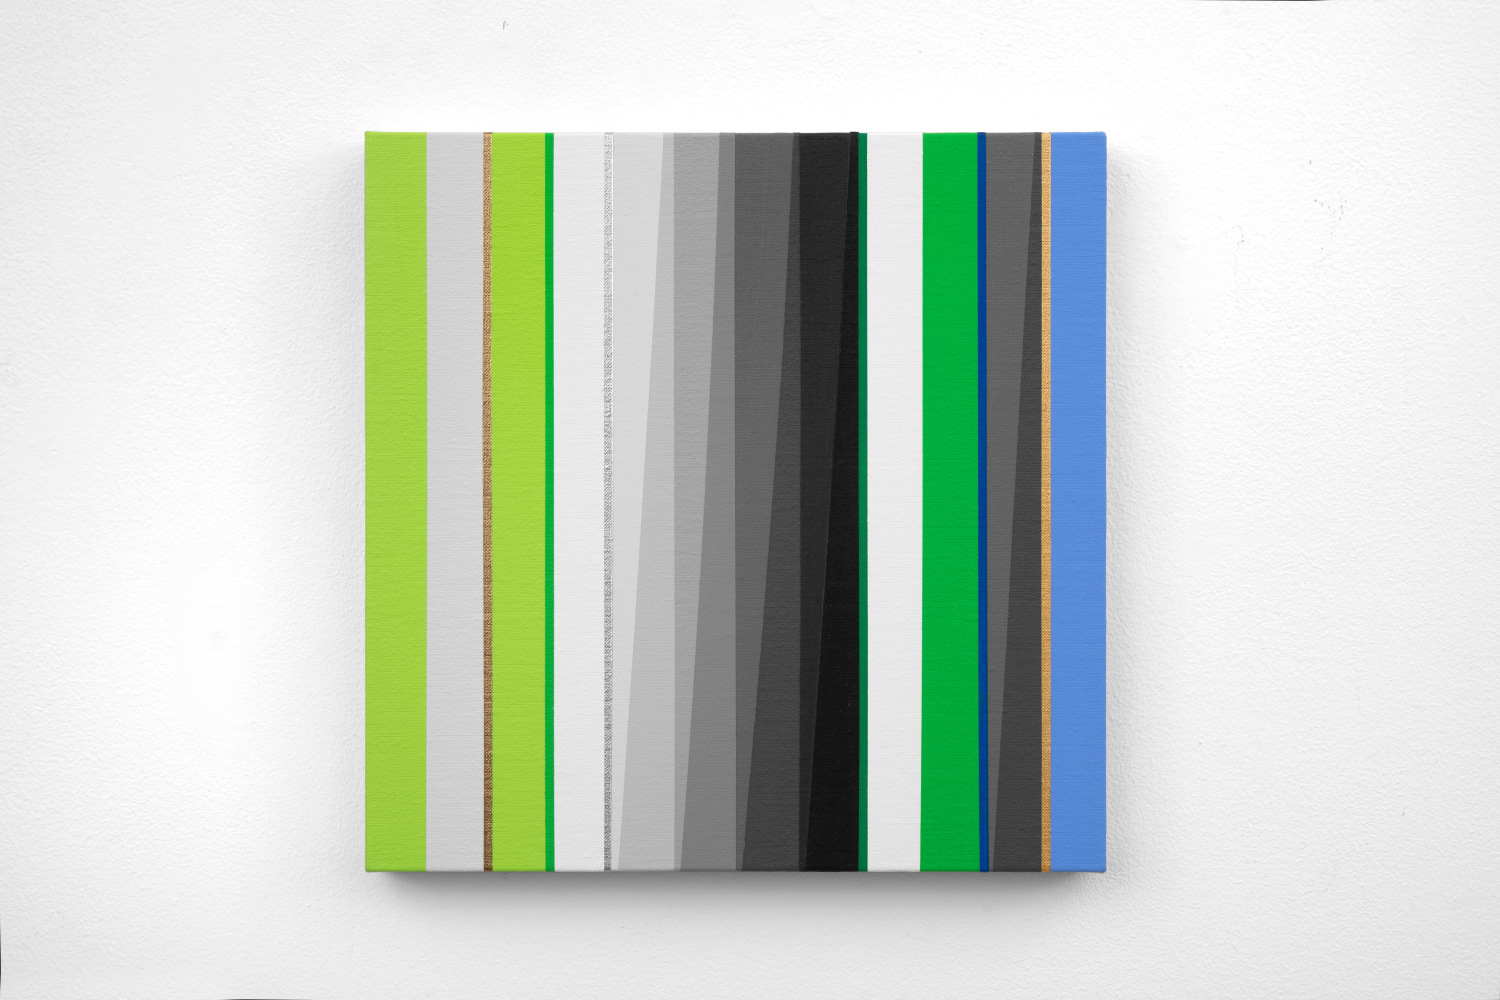 Gabriele Evertz (b. 1945) Metallics + Green, 2017 acrylic on linen over wood 12 x 12 inches; 30.5 x 30.5 centimeters LSFA# 15994